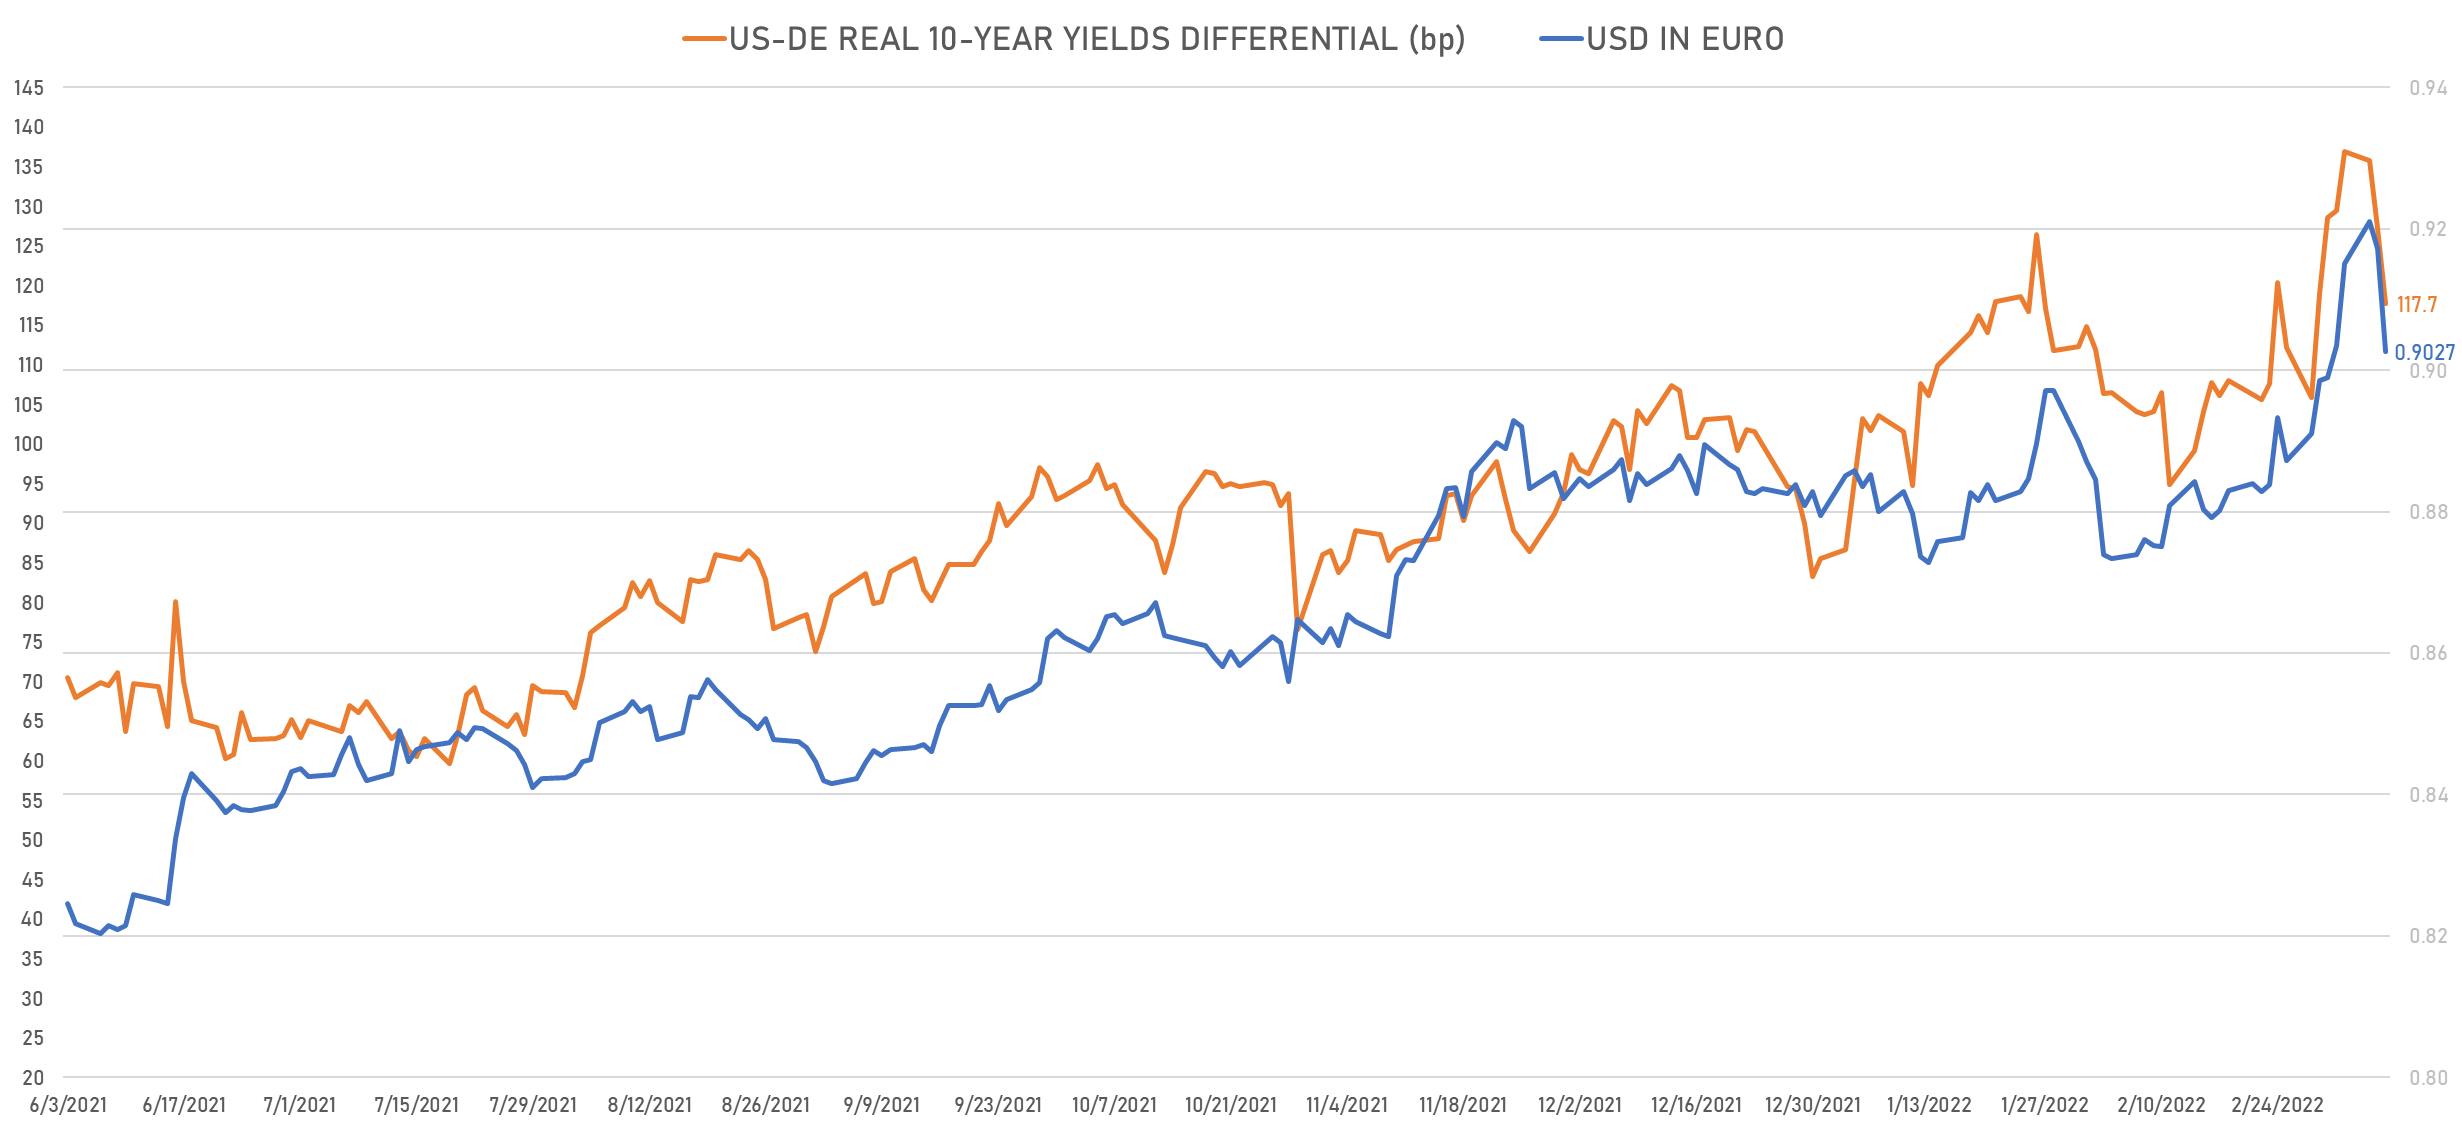 EURO vs 10Y US-DE Real Yields Differential | Sources: phipost.com, Refinitiv data